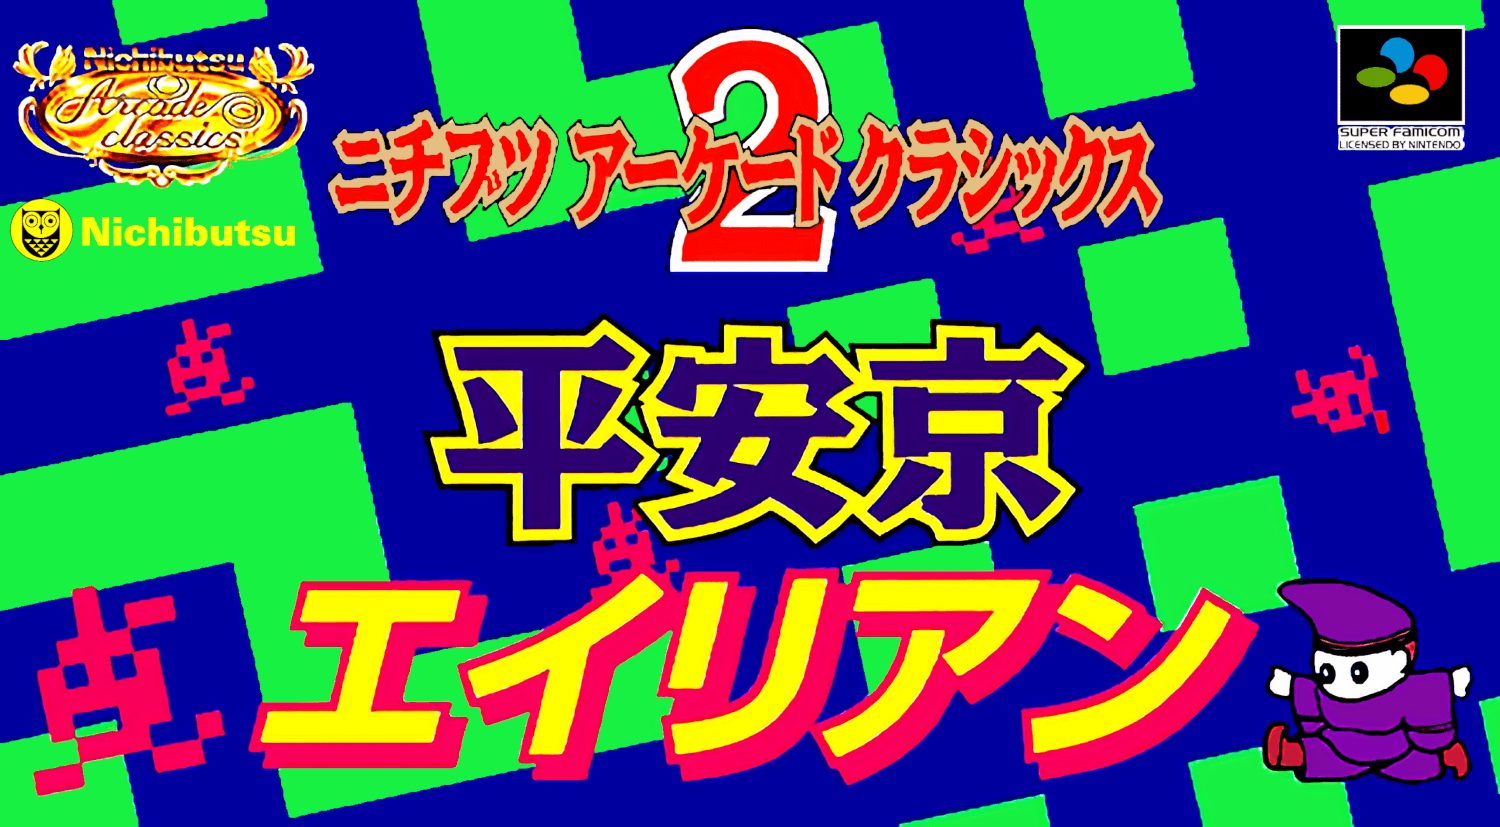 Nichibutsu Arcade Classics 2: Heiankyou Alien